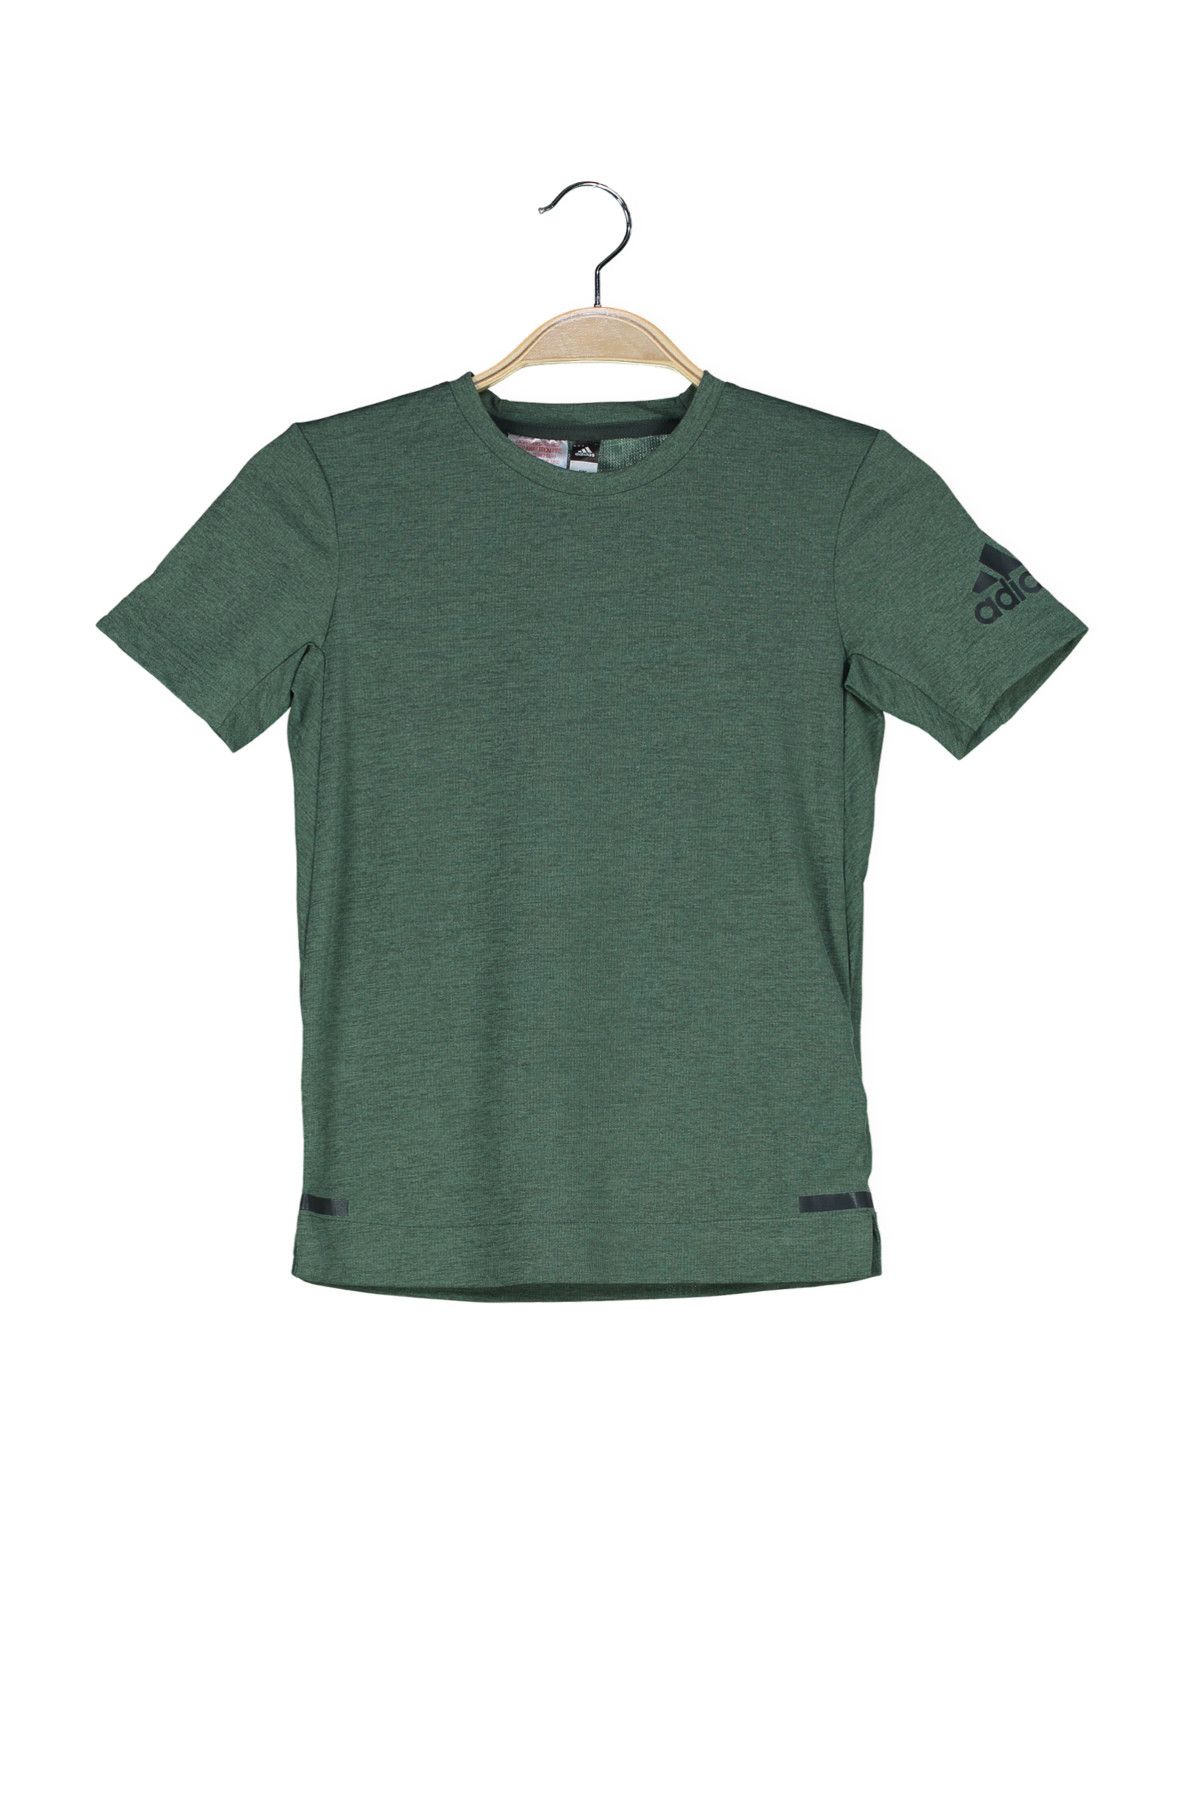 adidas Erkek Çocuk Antrenman T-shirt - Yb Chill Tee - BK3401